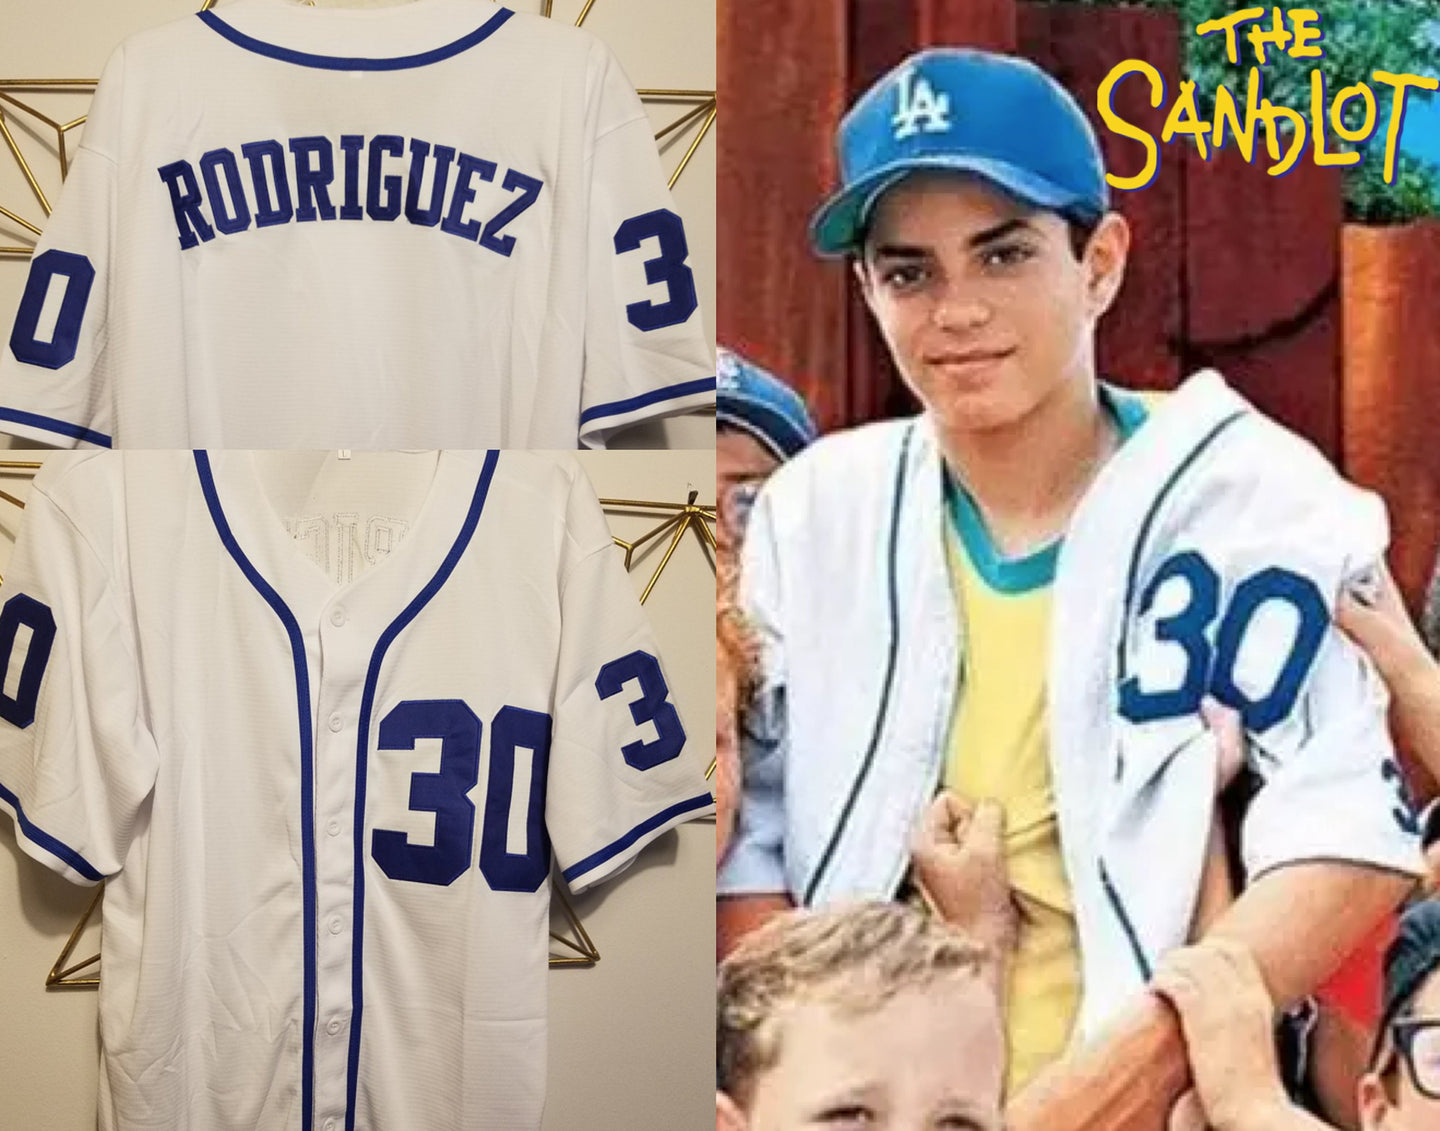 Benny The Jet Rodriguez #30 The Sandlot Movie Baseball Jersey S